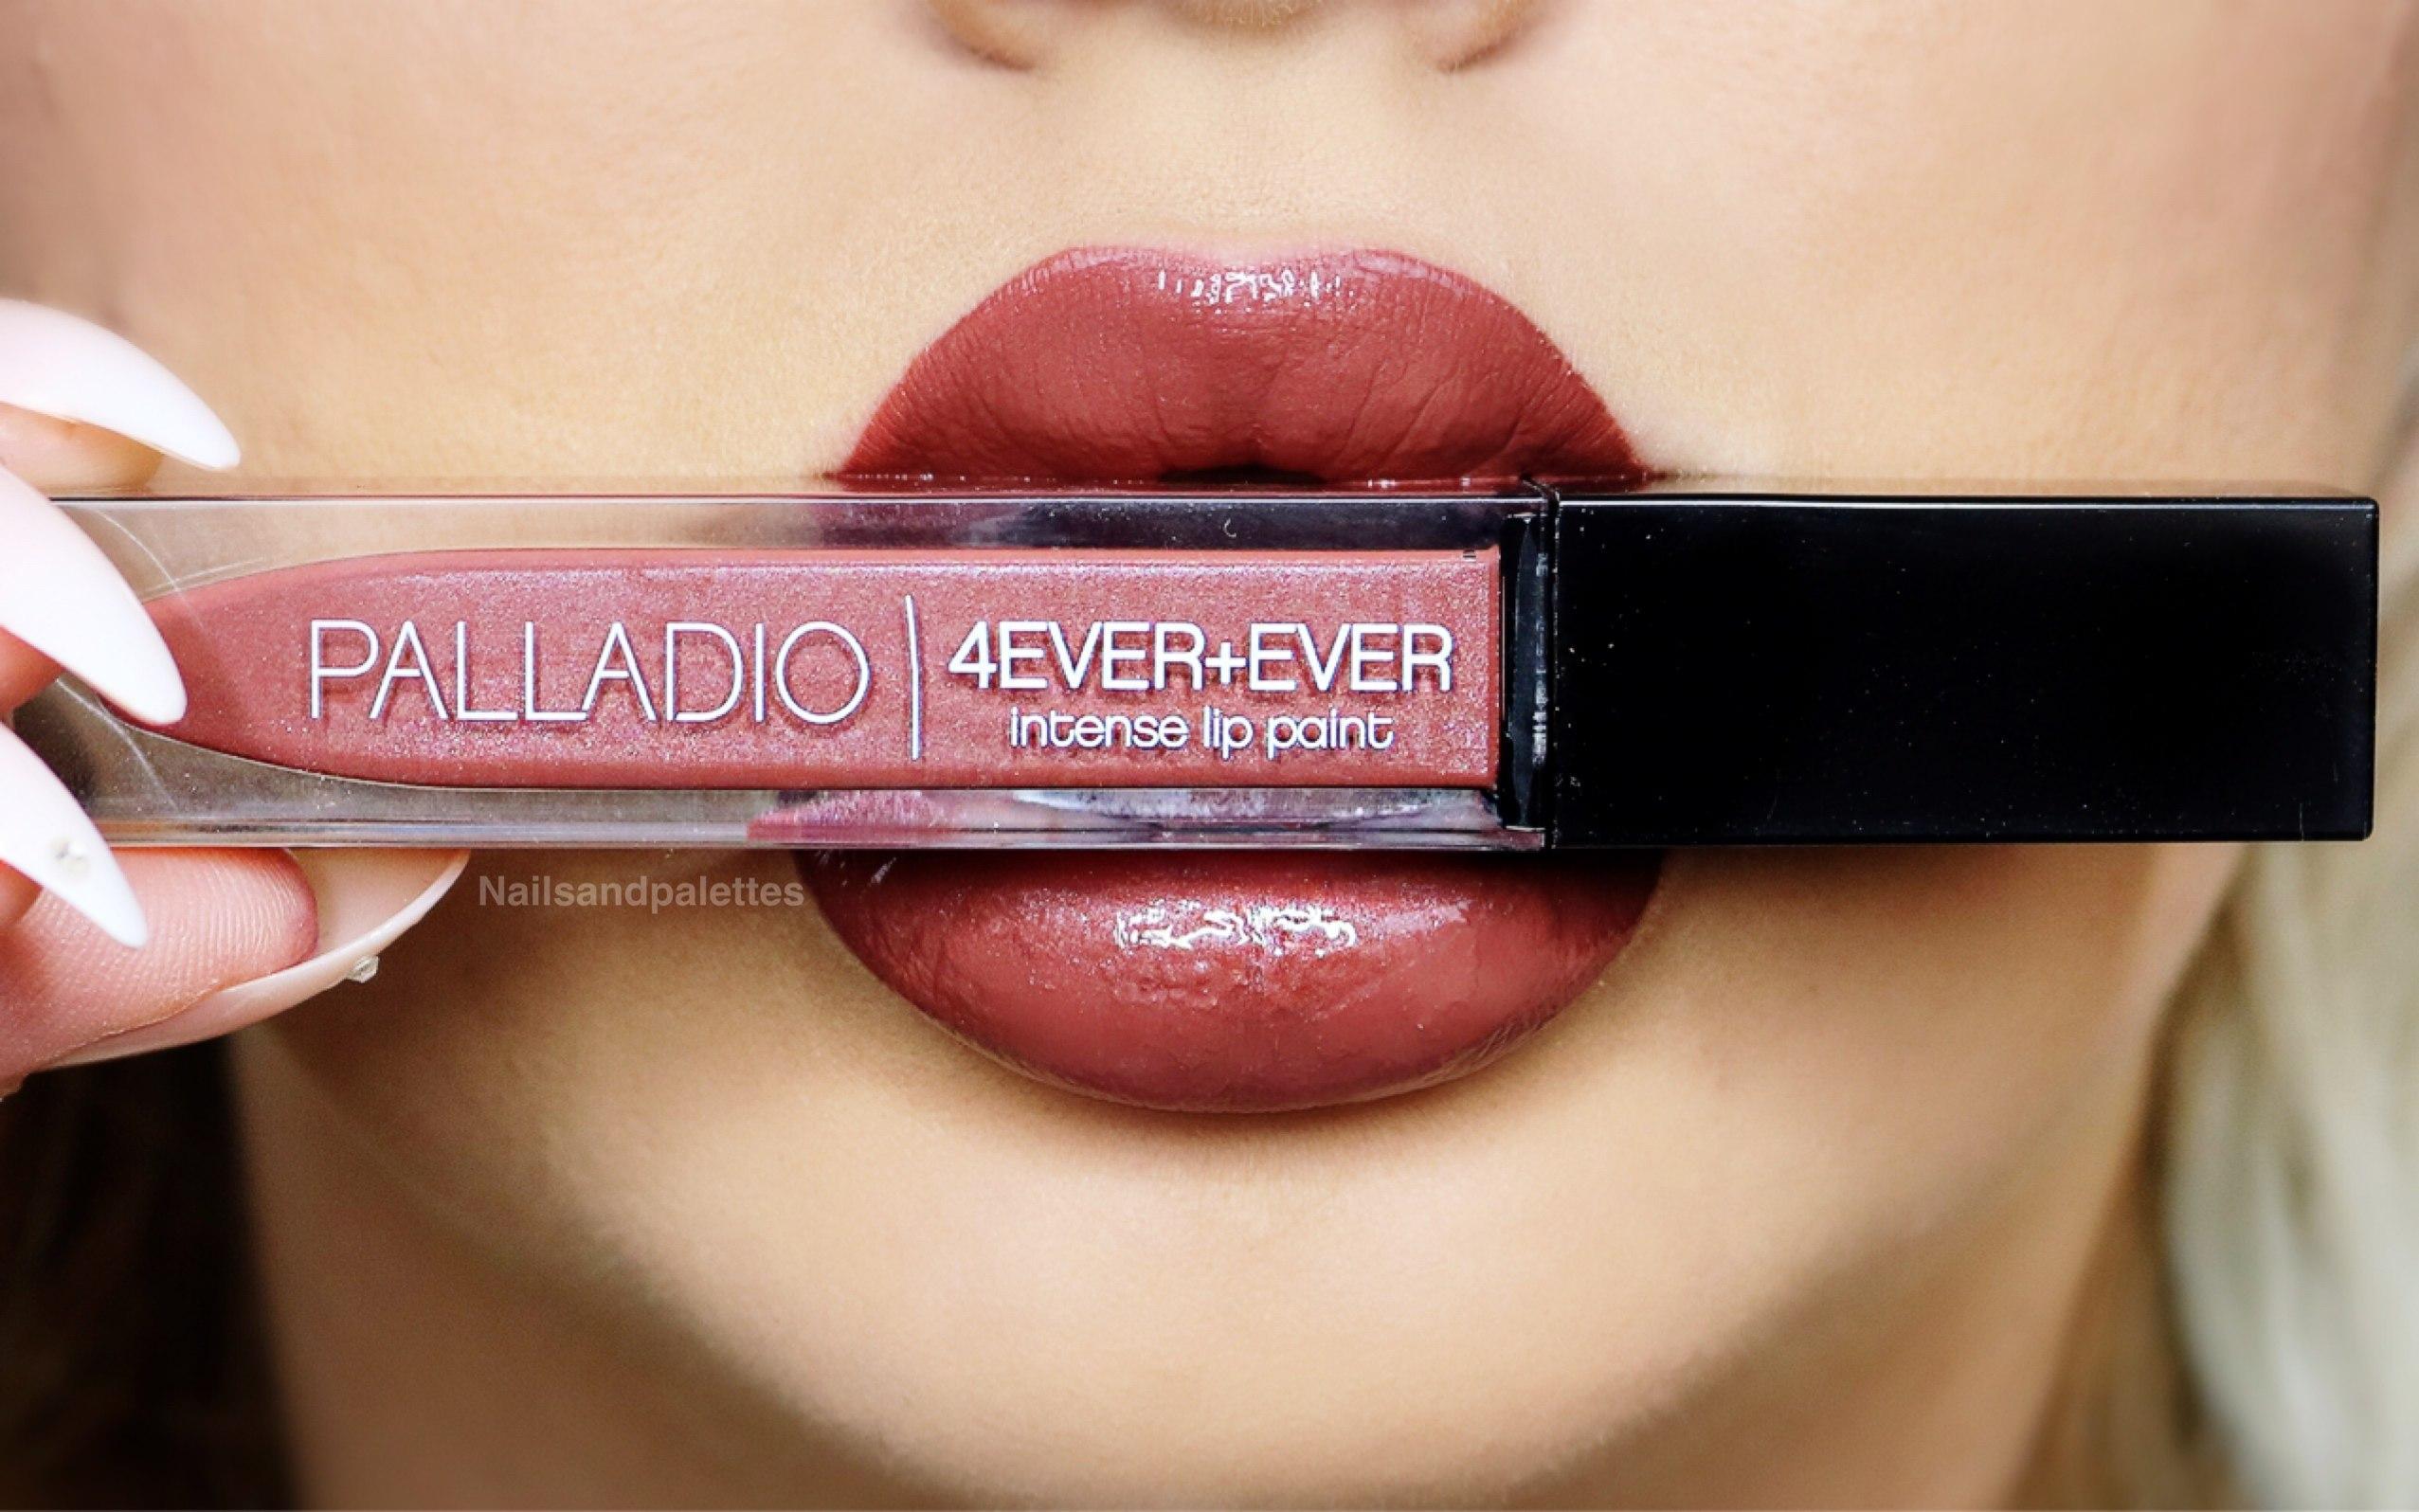 Palladio 4 EVER + EVER Intense Lip Paint